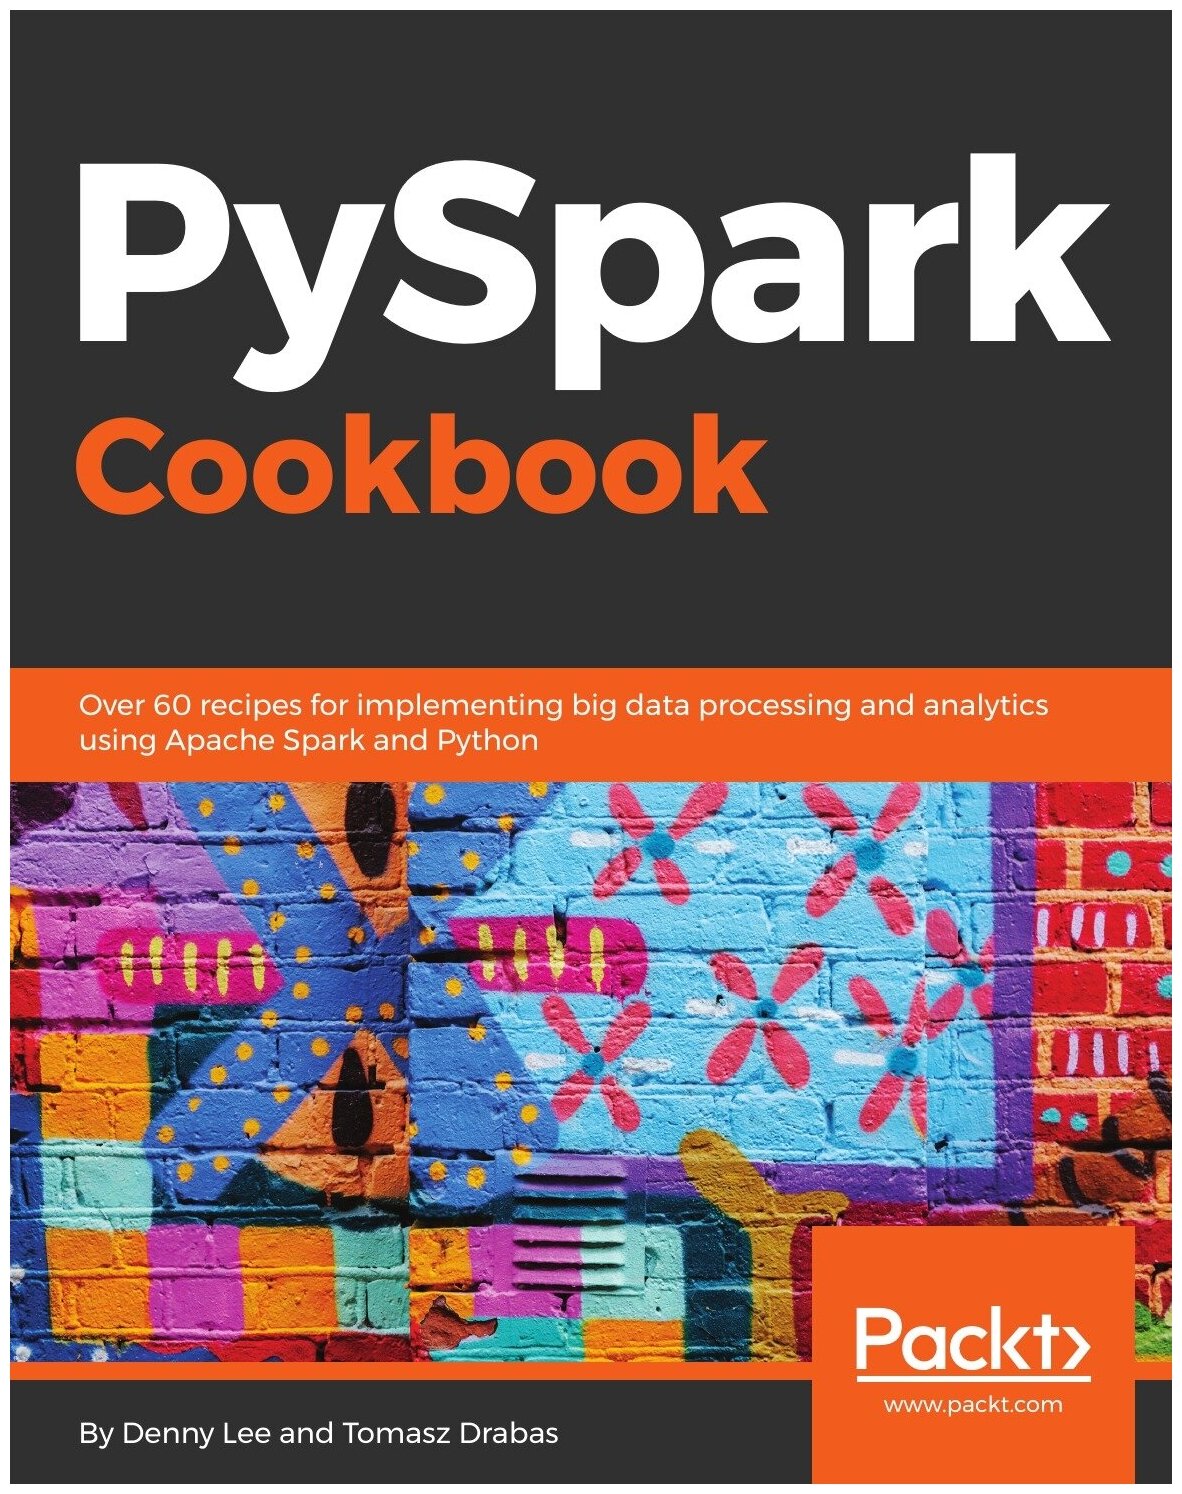 PySpark Cookbook